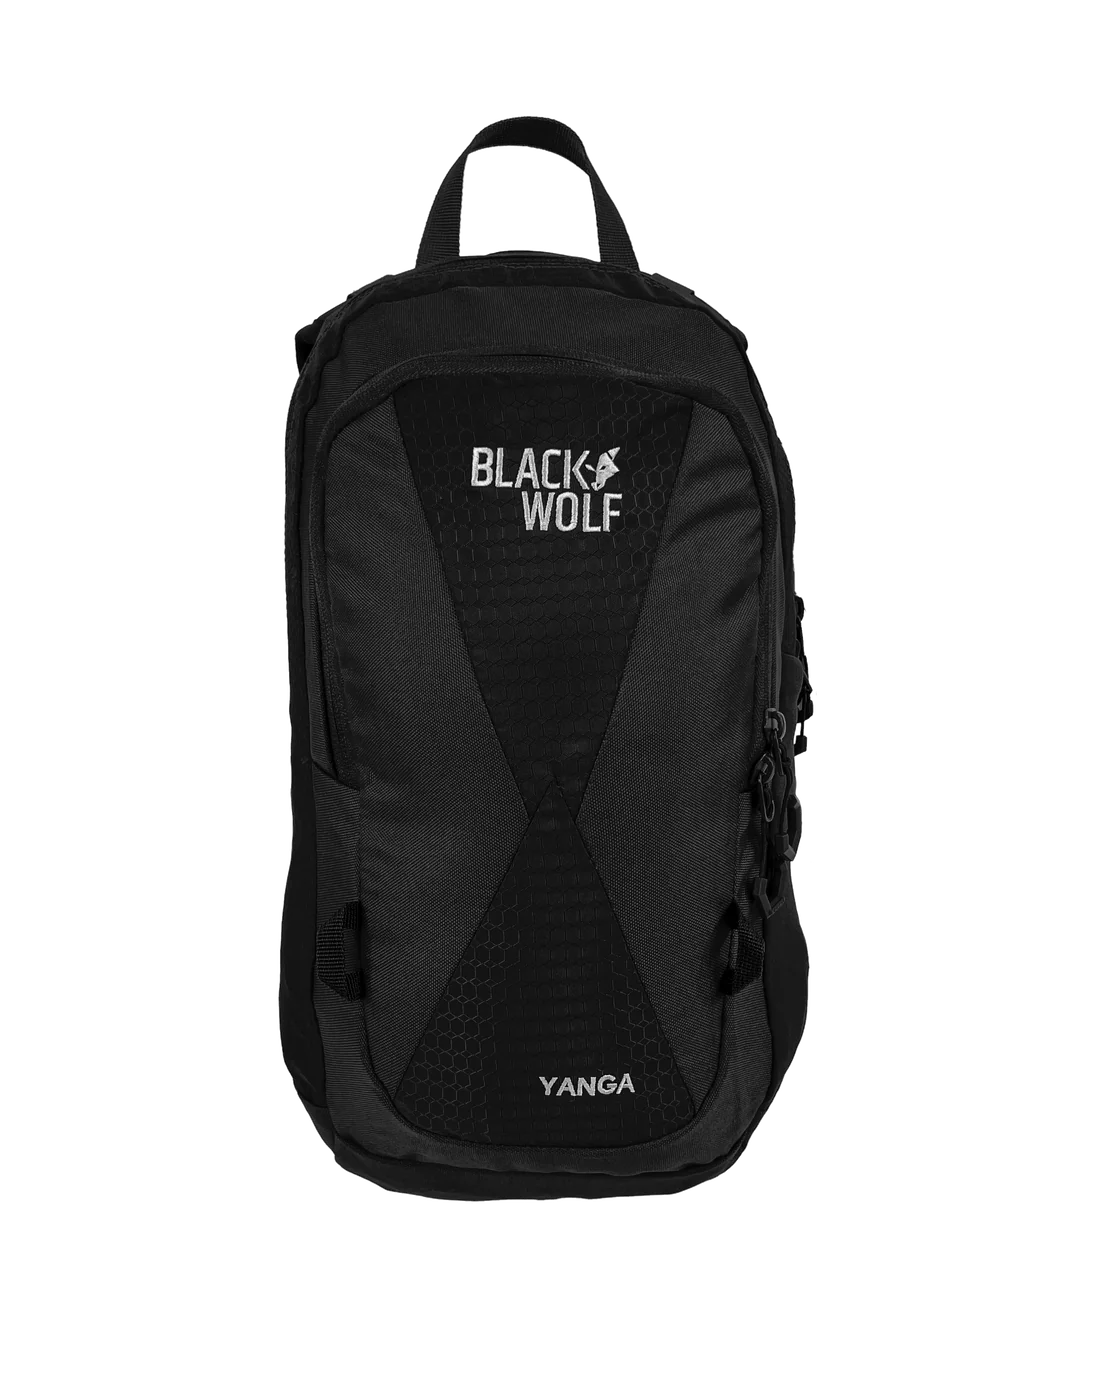 BlackWolf Yanga Daypack - 13 Litres